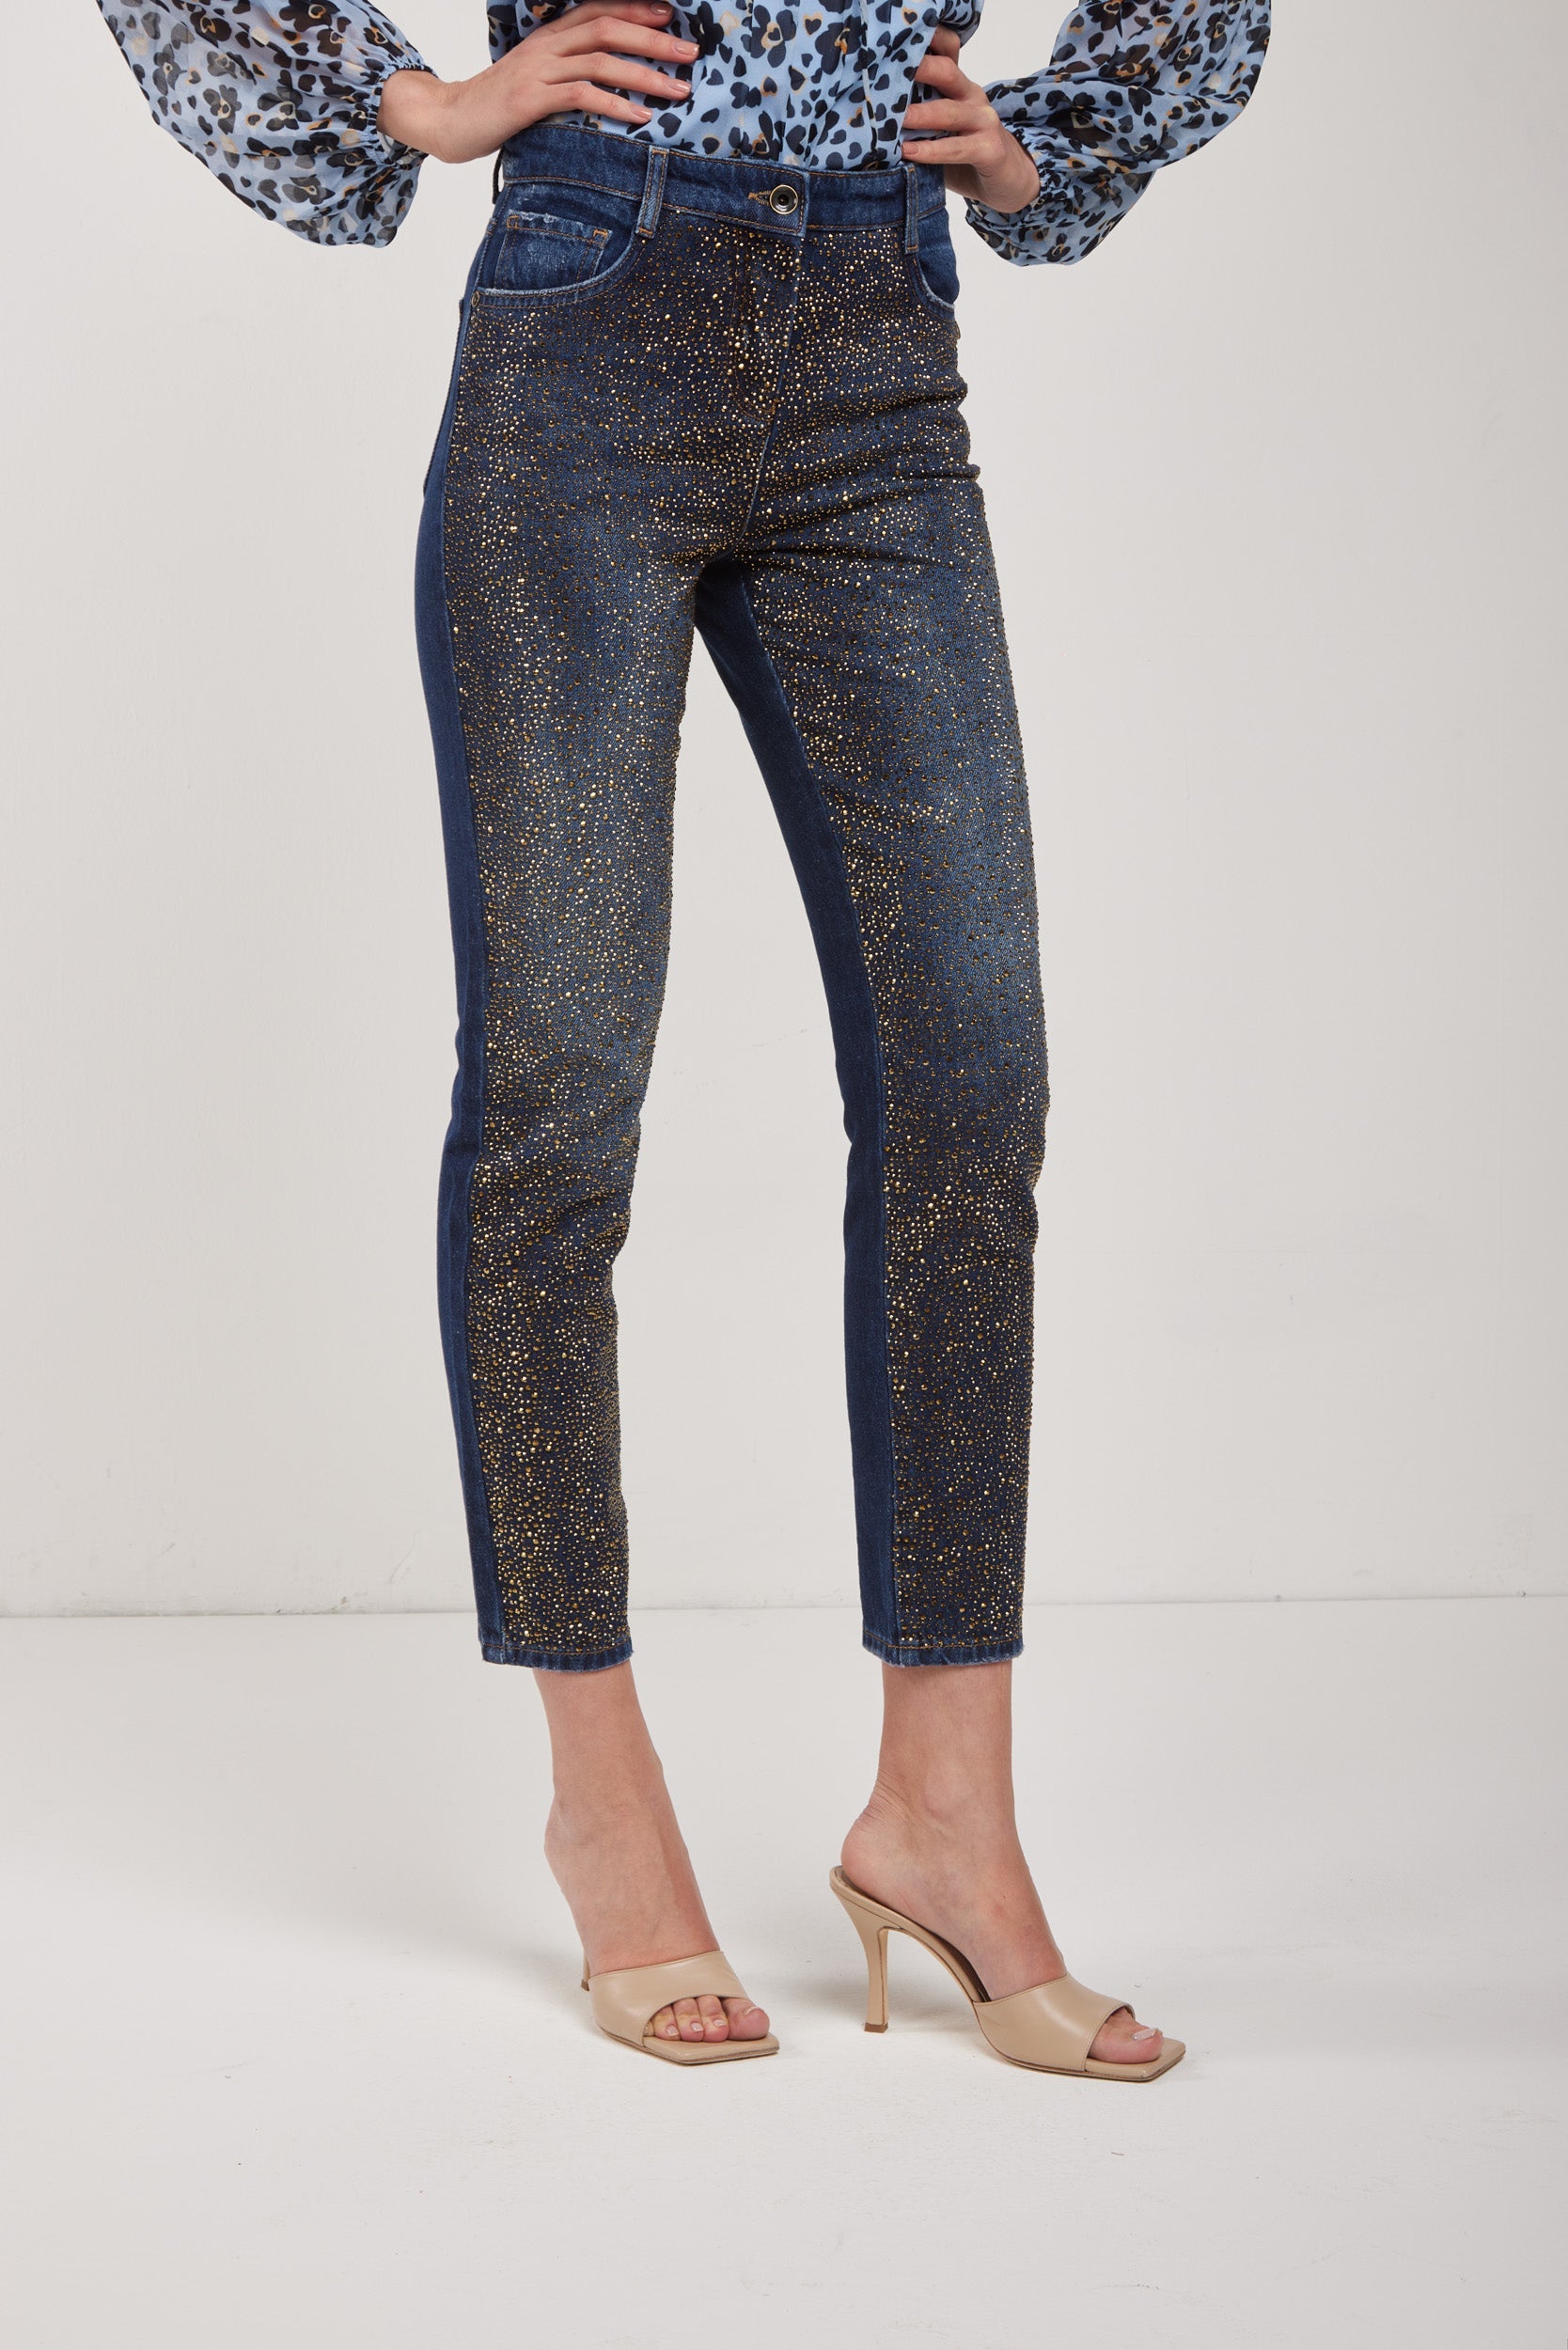 PATRIZIA PEPE Jeans in Denim Glitter